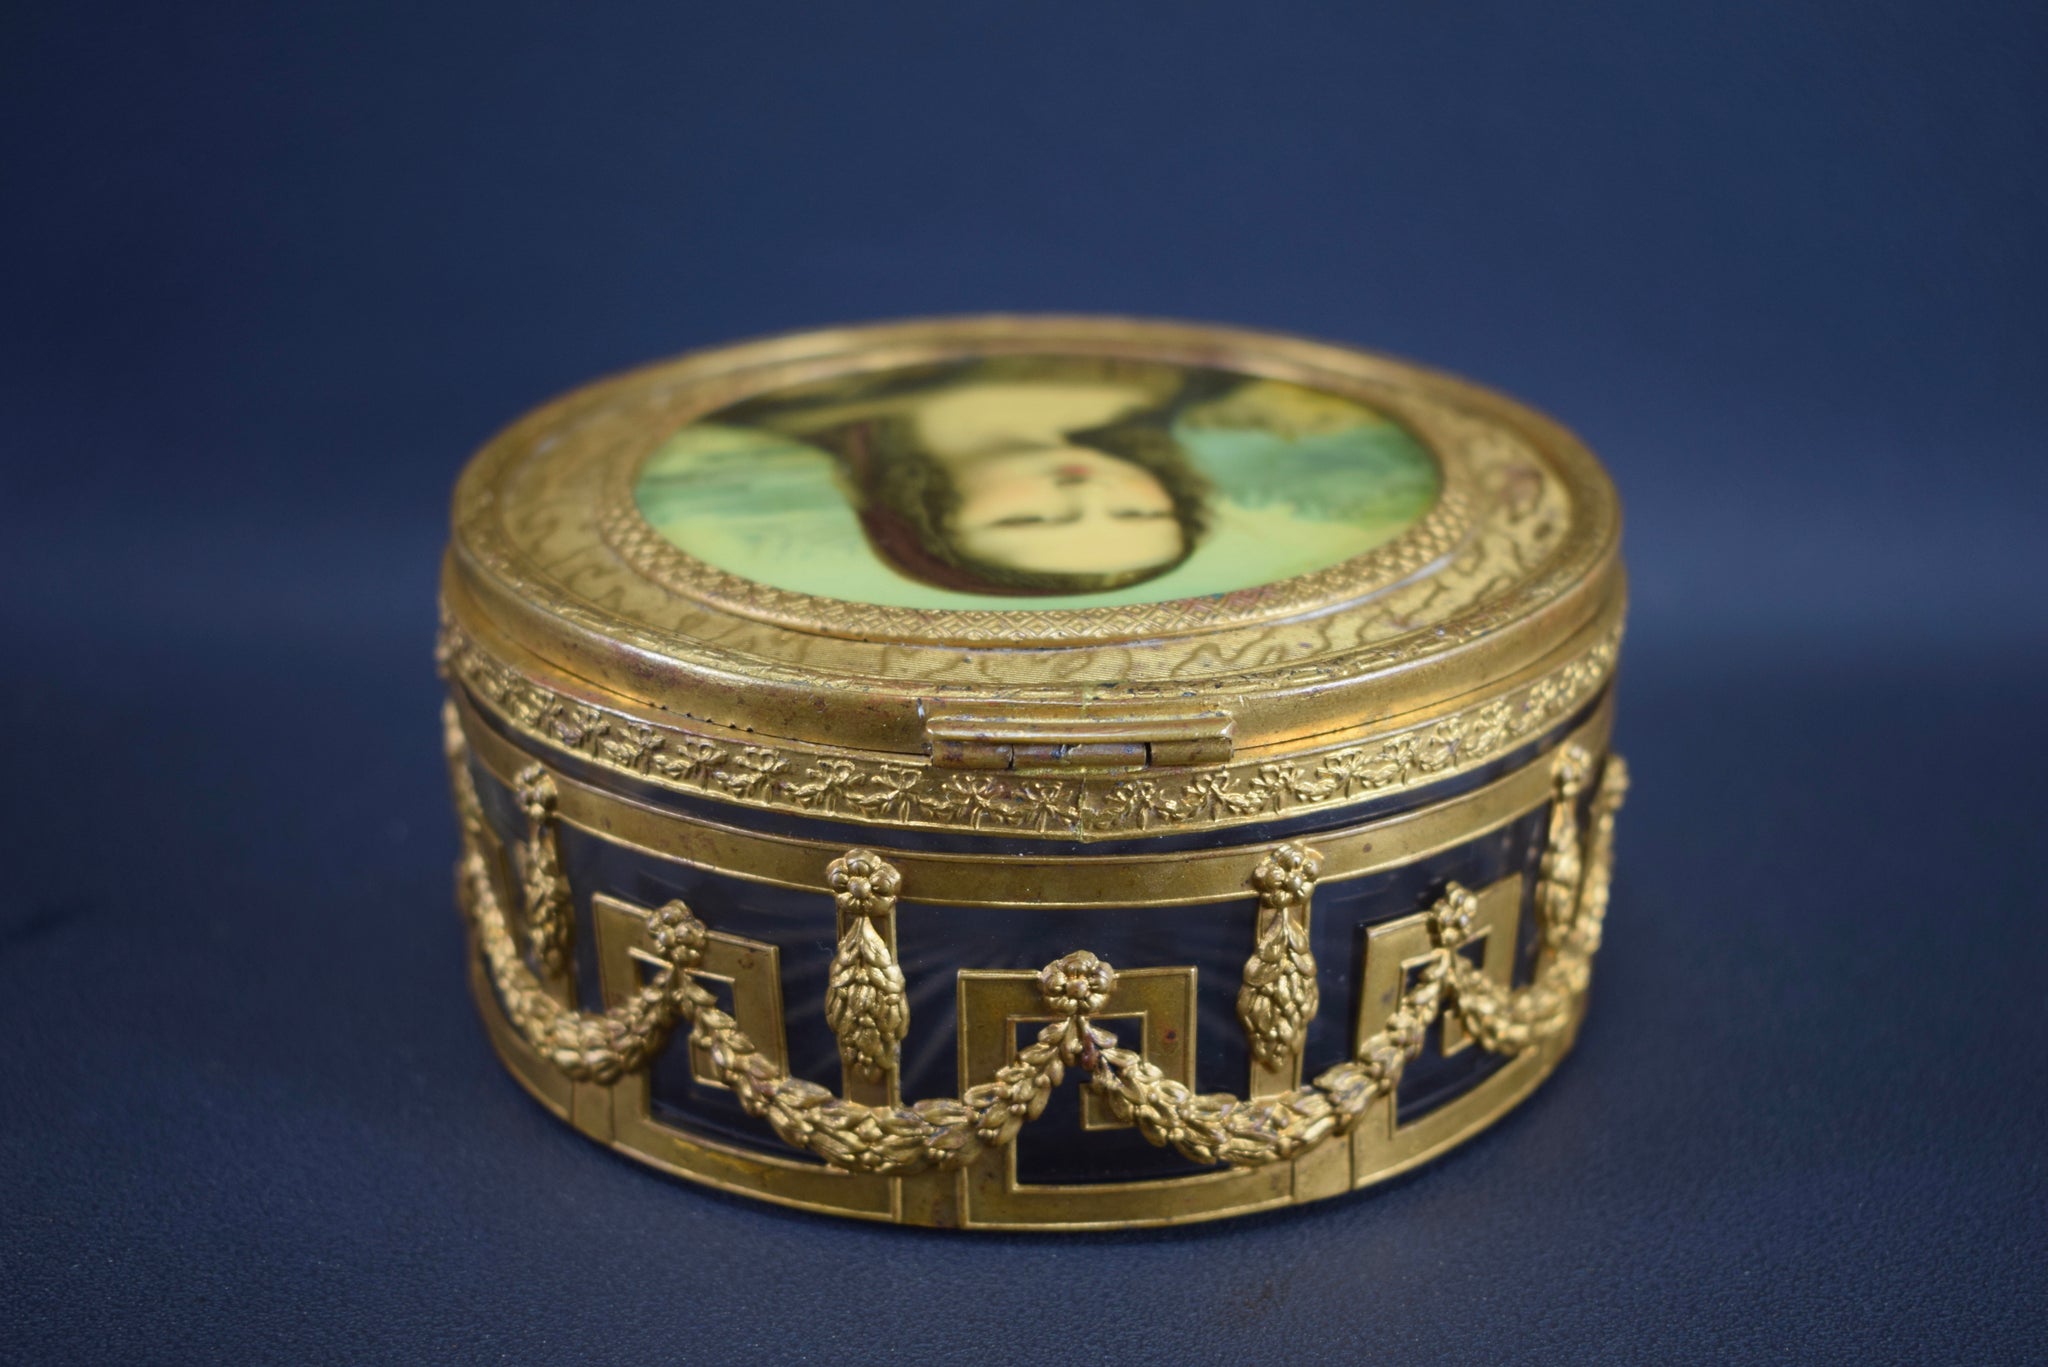 Jewelry box decoration of the Mona Lisa 19th